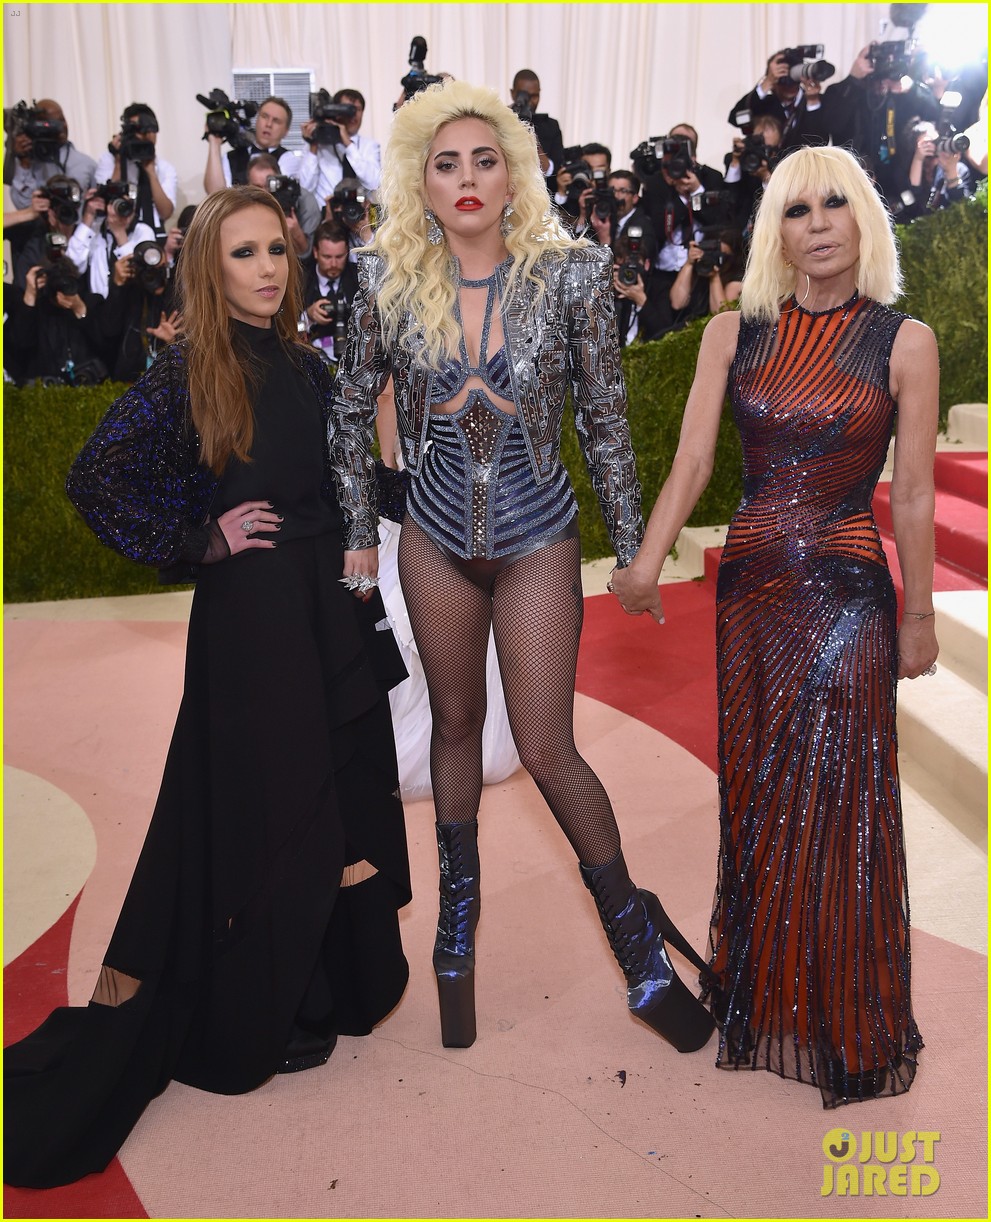 Lady Gagas Explicit Heels Censored on American Idol